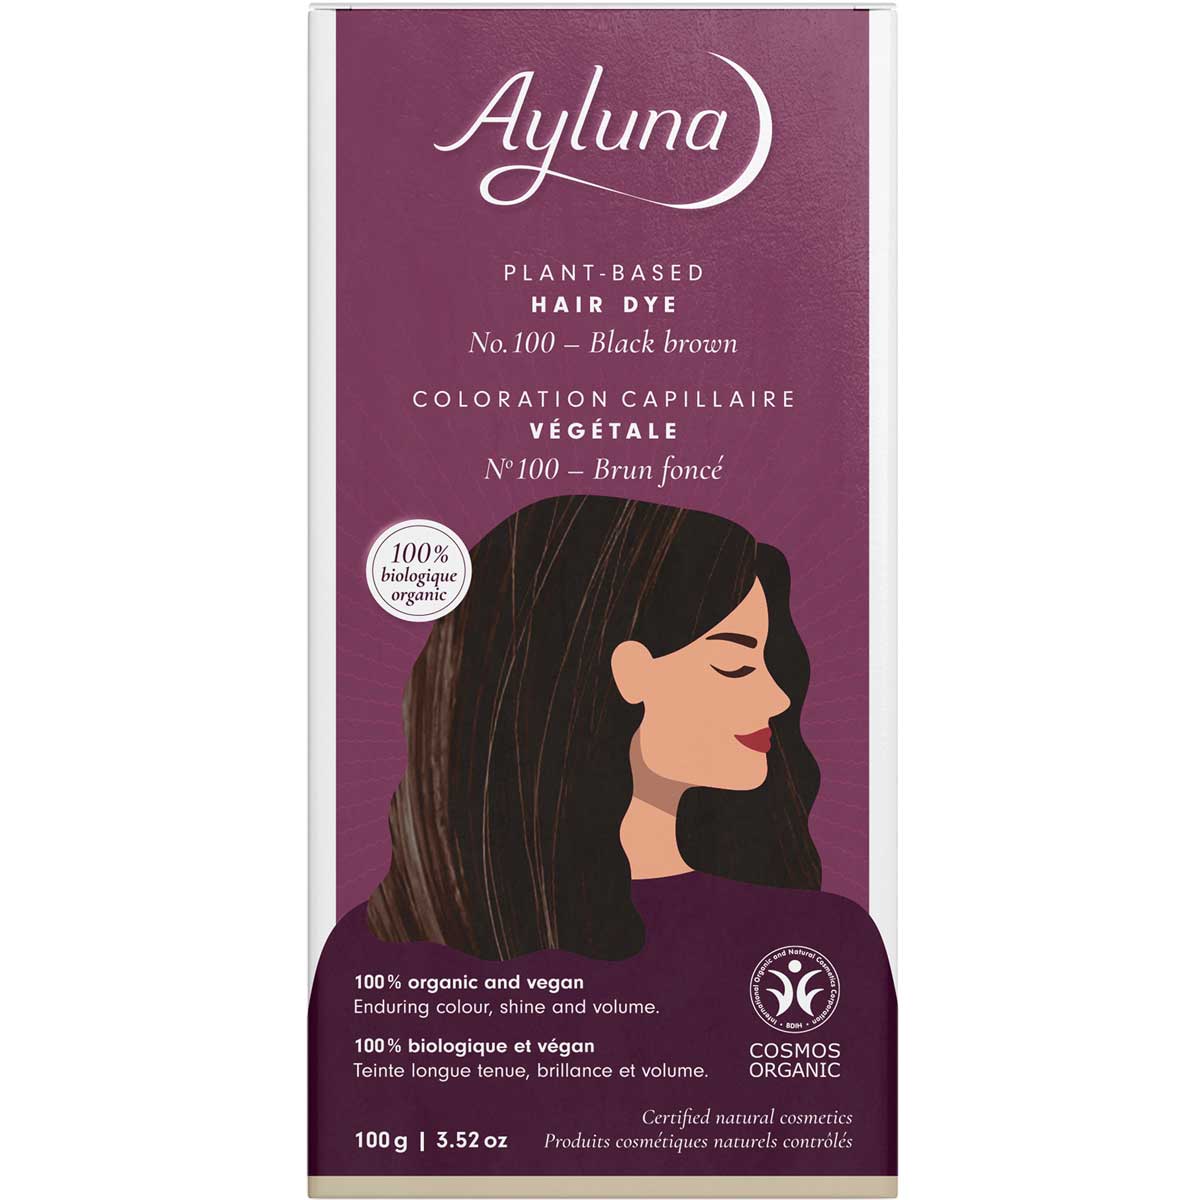 Ayluna Black Brown No.100 Plant-Based Hair Dye 100g